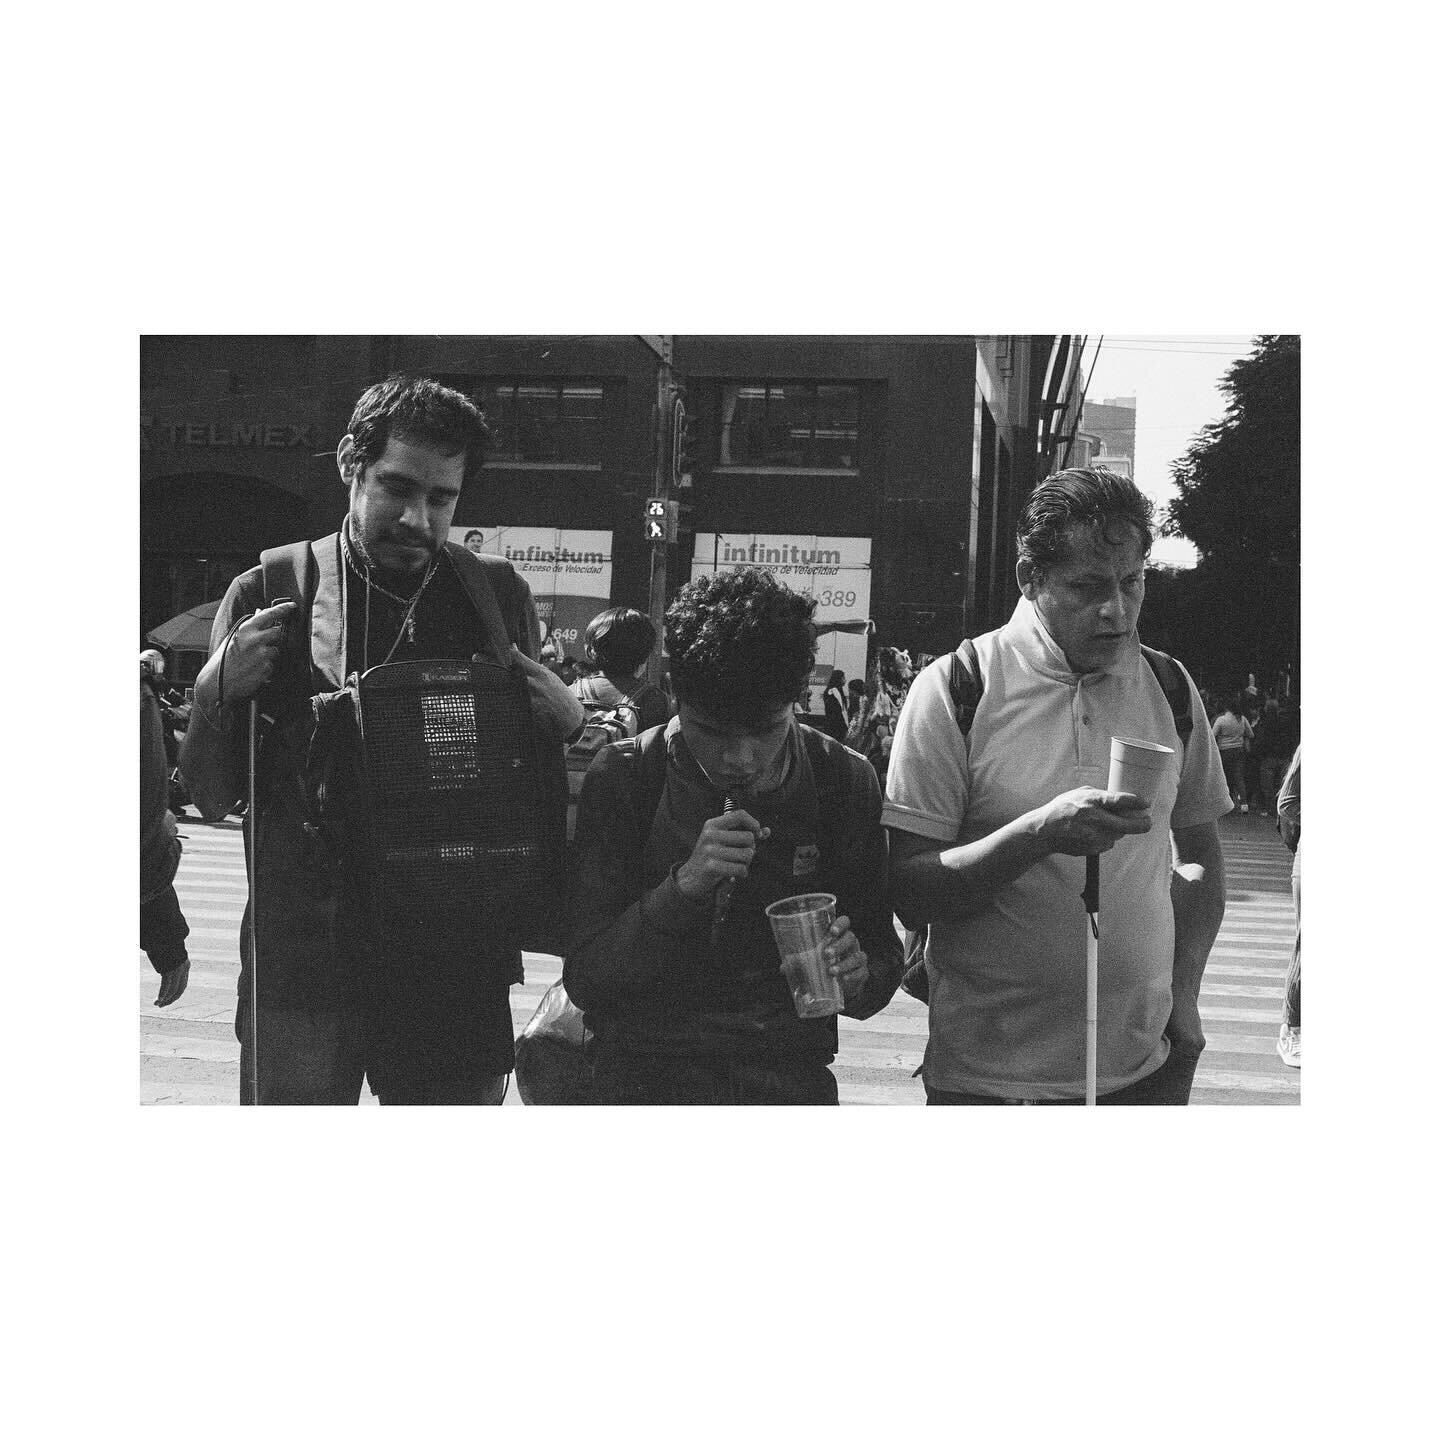 the sound of our collective hums 🎶
.
.
.
 🎞️ Ilford 400 | rev/scan @fotohercules 
.
.
.
#streetshots #somewheremagazine #35mmfilmphotography #mexicoanalogo
#analogphotography #disparafilm  #onfilm #35mmfilm #afilmcosmos #thefilmsorority #filmphotog